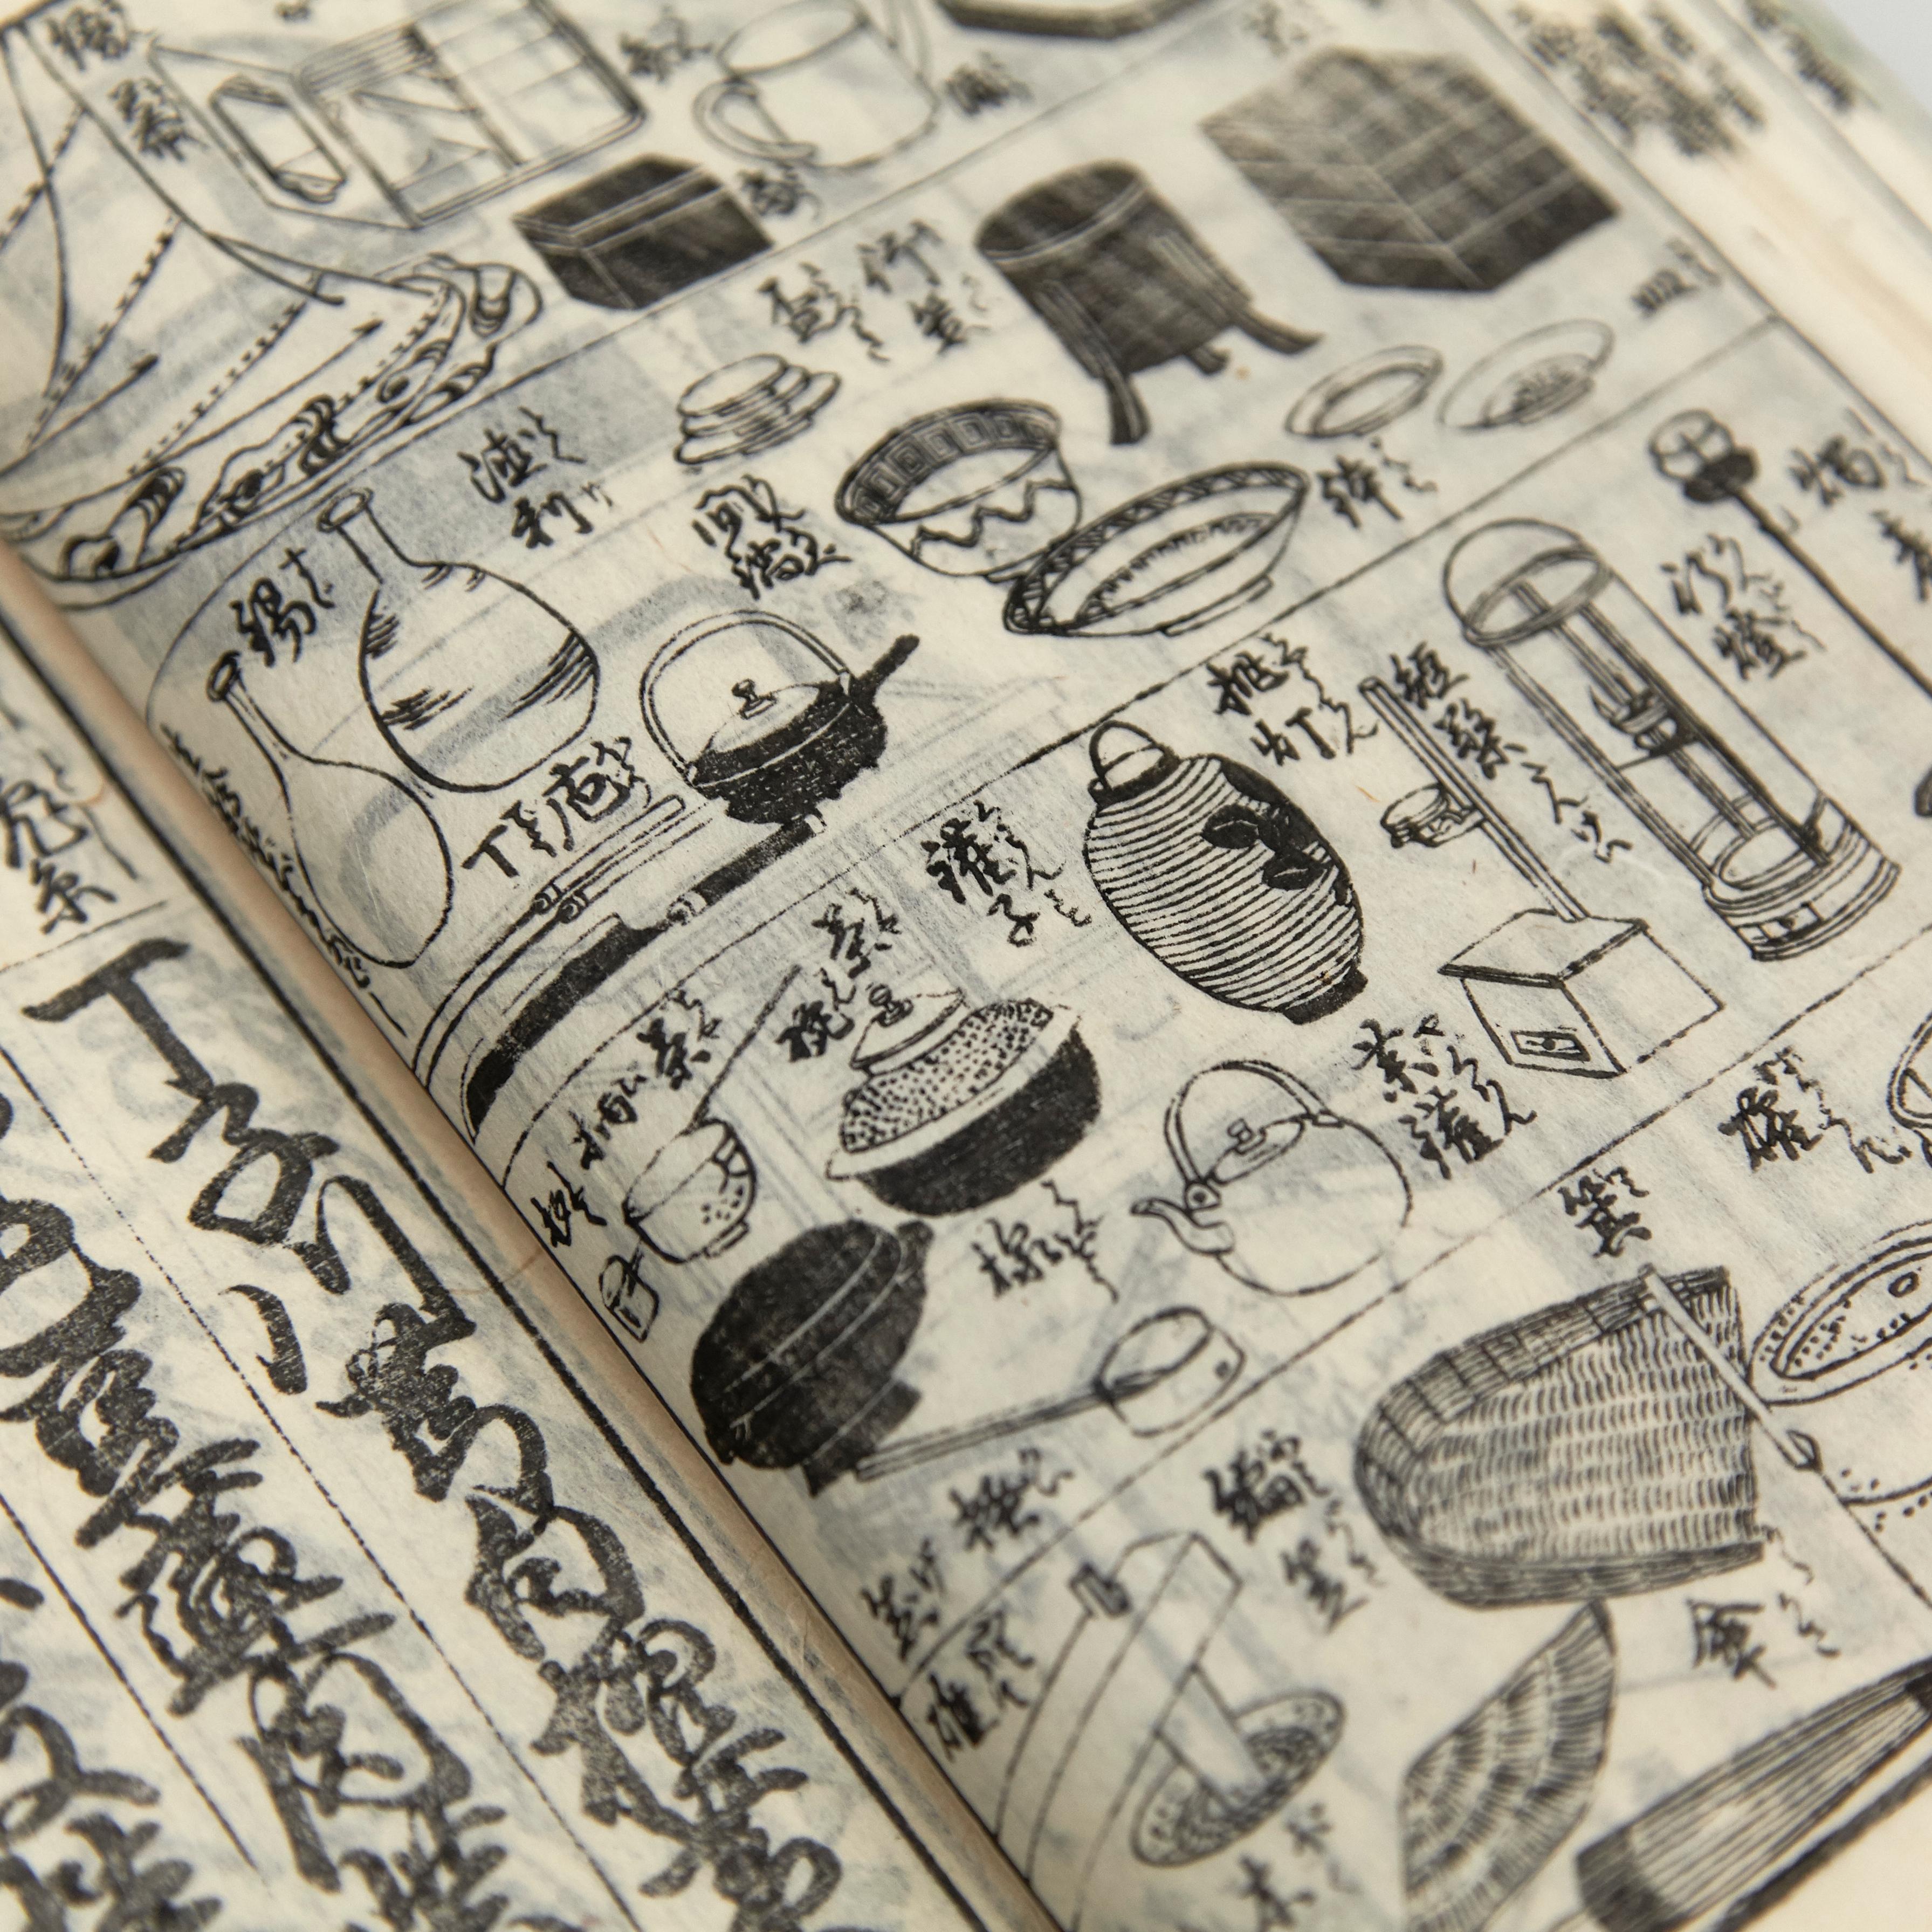 Paper Antique Japanese Oraimono Book Edo Period, circa 1840